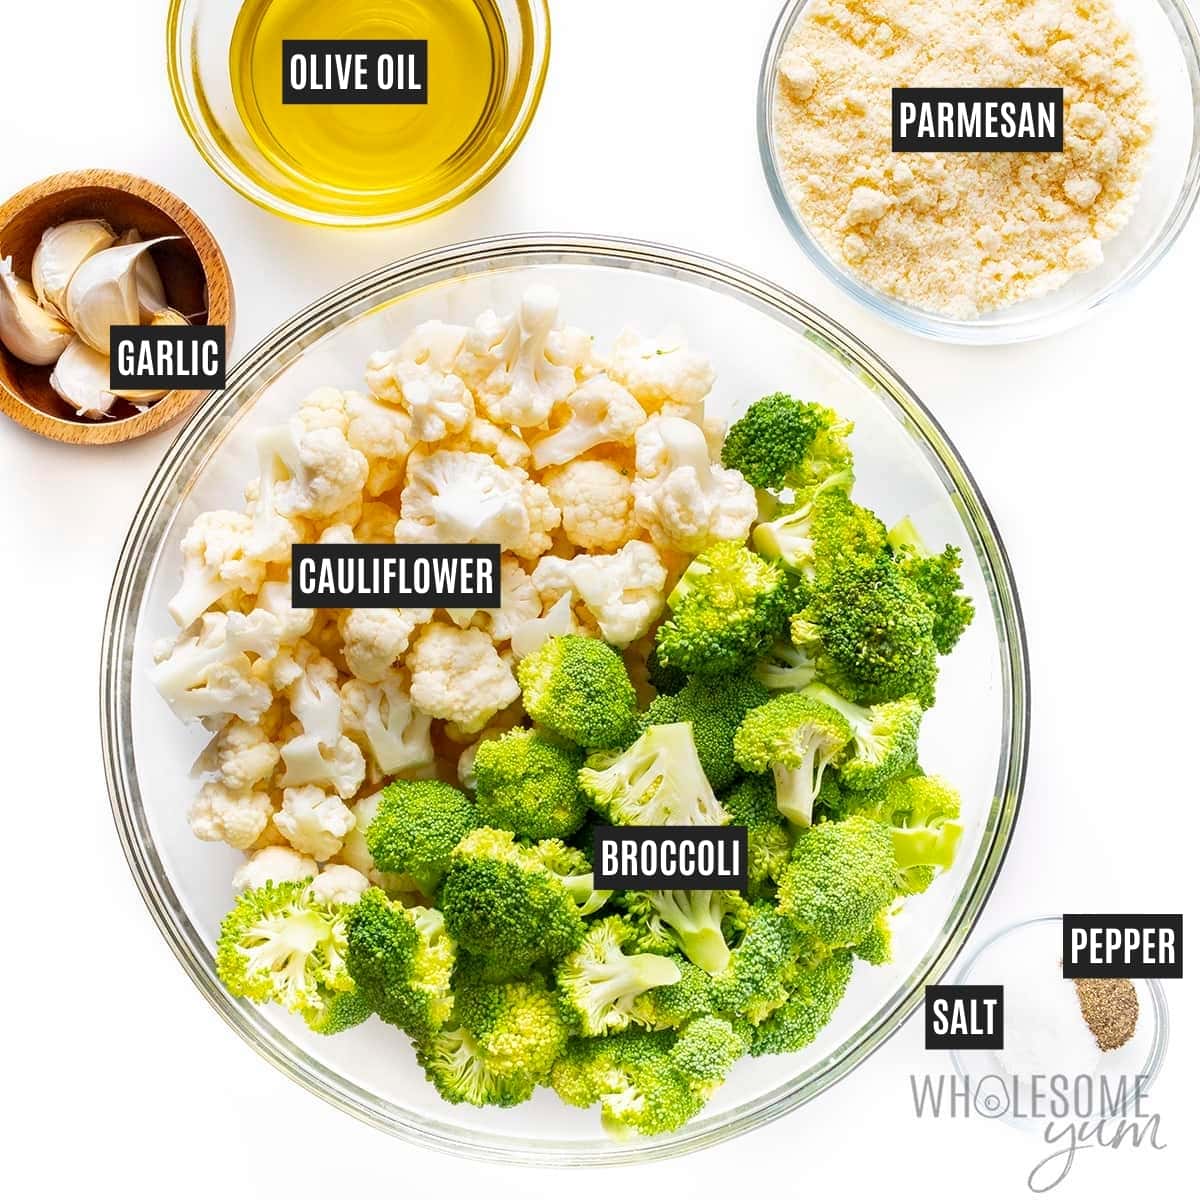 Broccoli and cauliflower recipe ingredients.